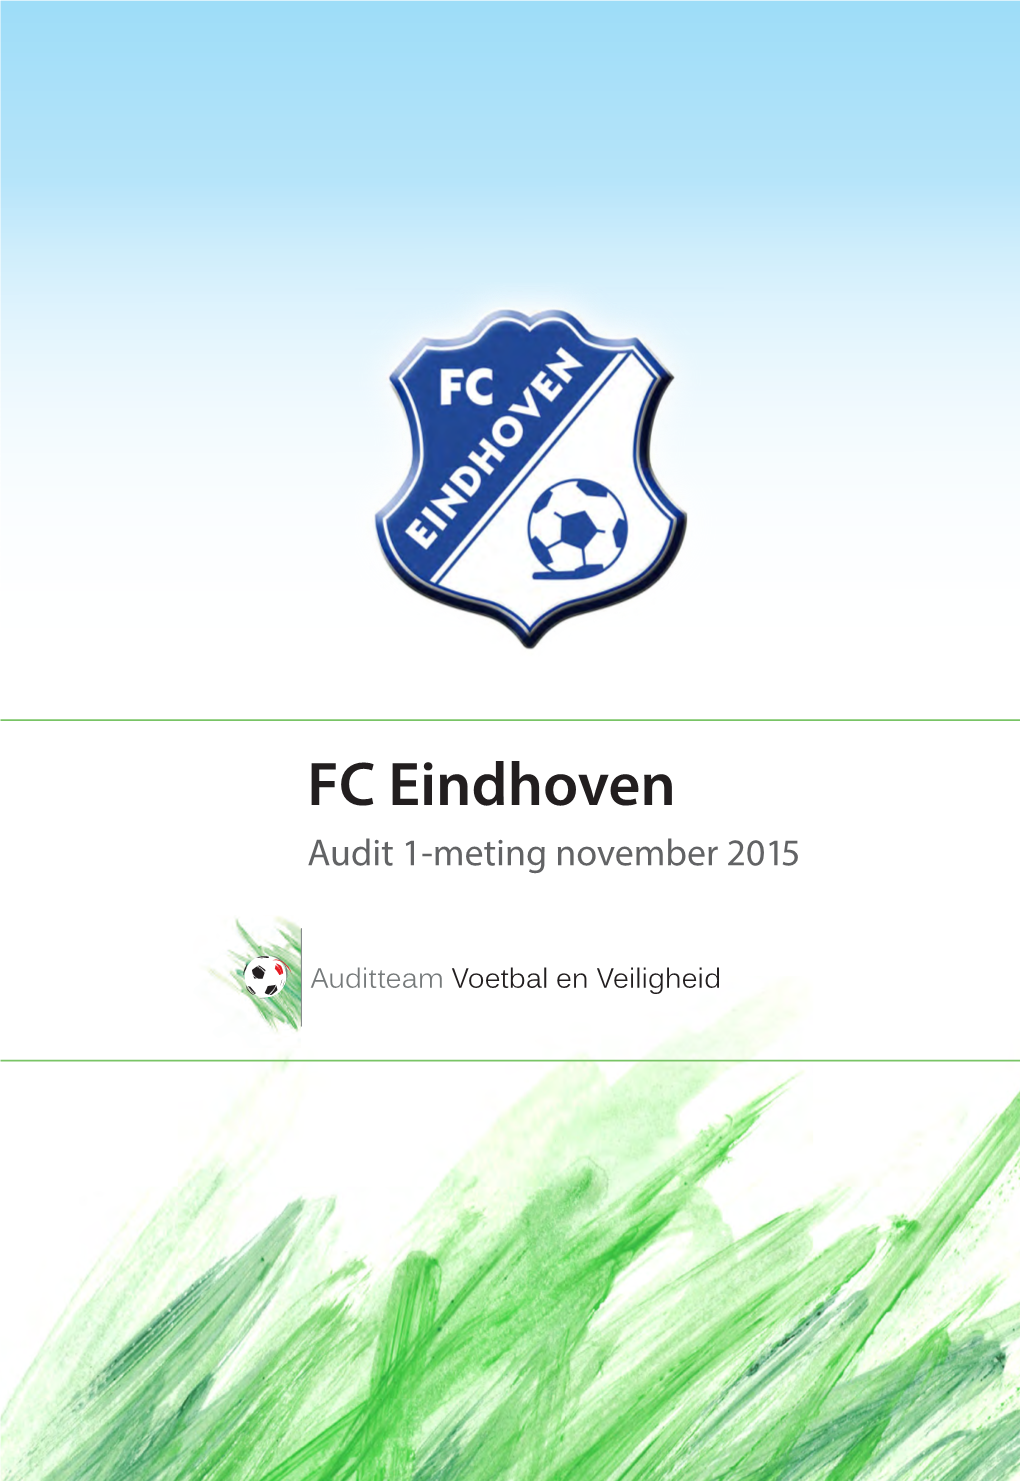 FC Eindhoven Audit 1-Meting November 2015